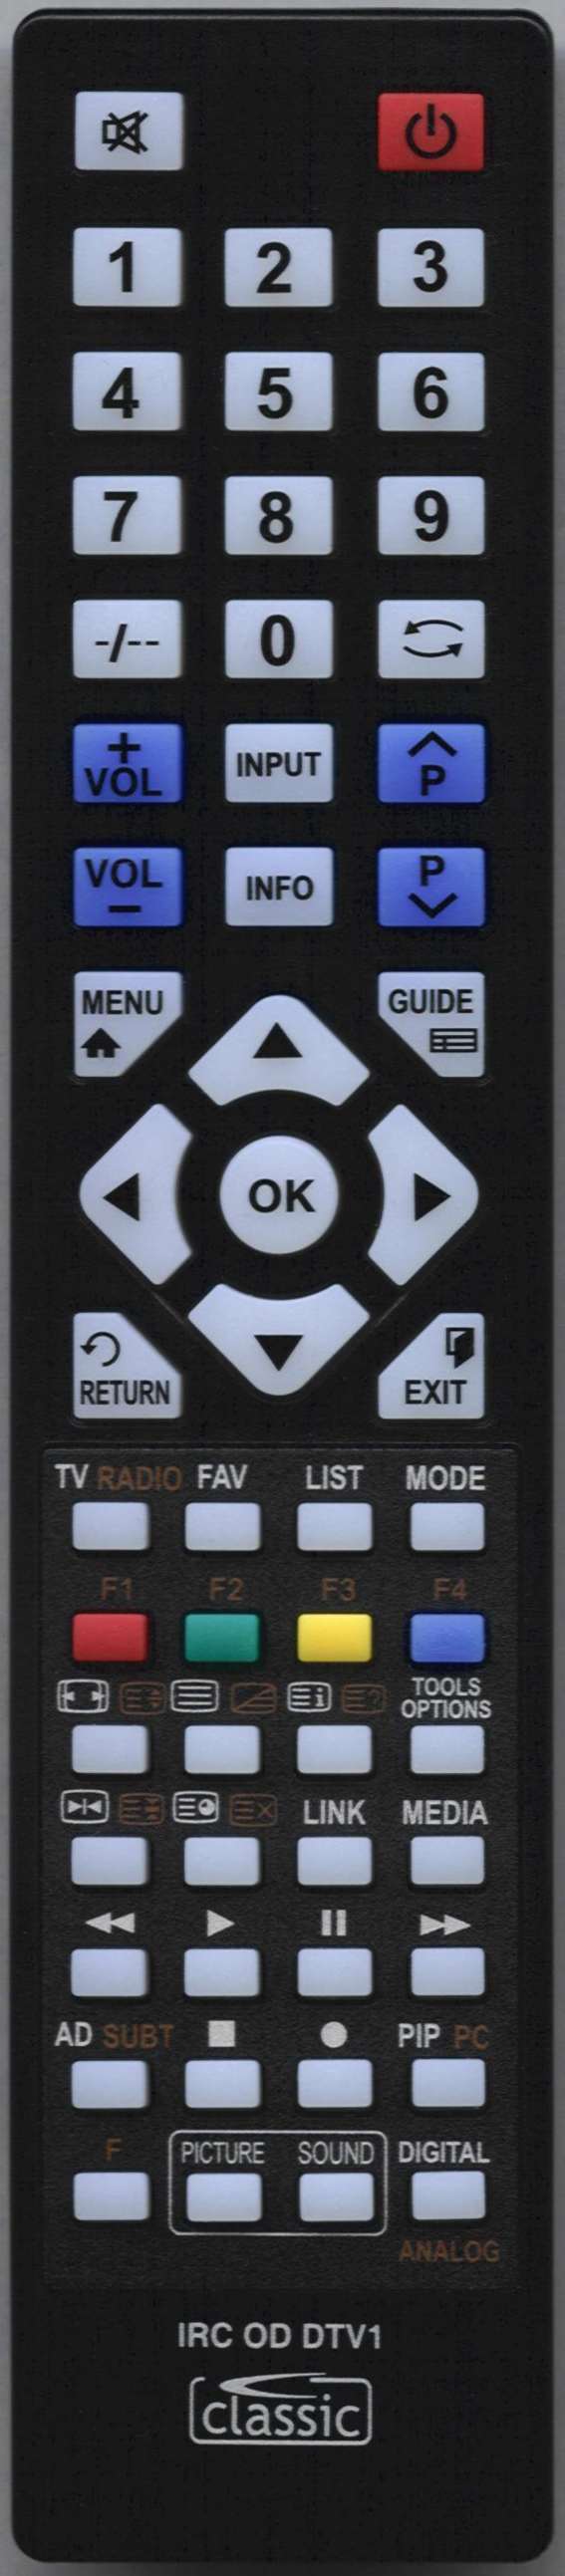 LG 43UK6750 Remote Control Alternative